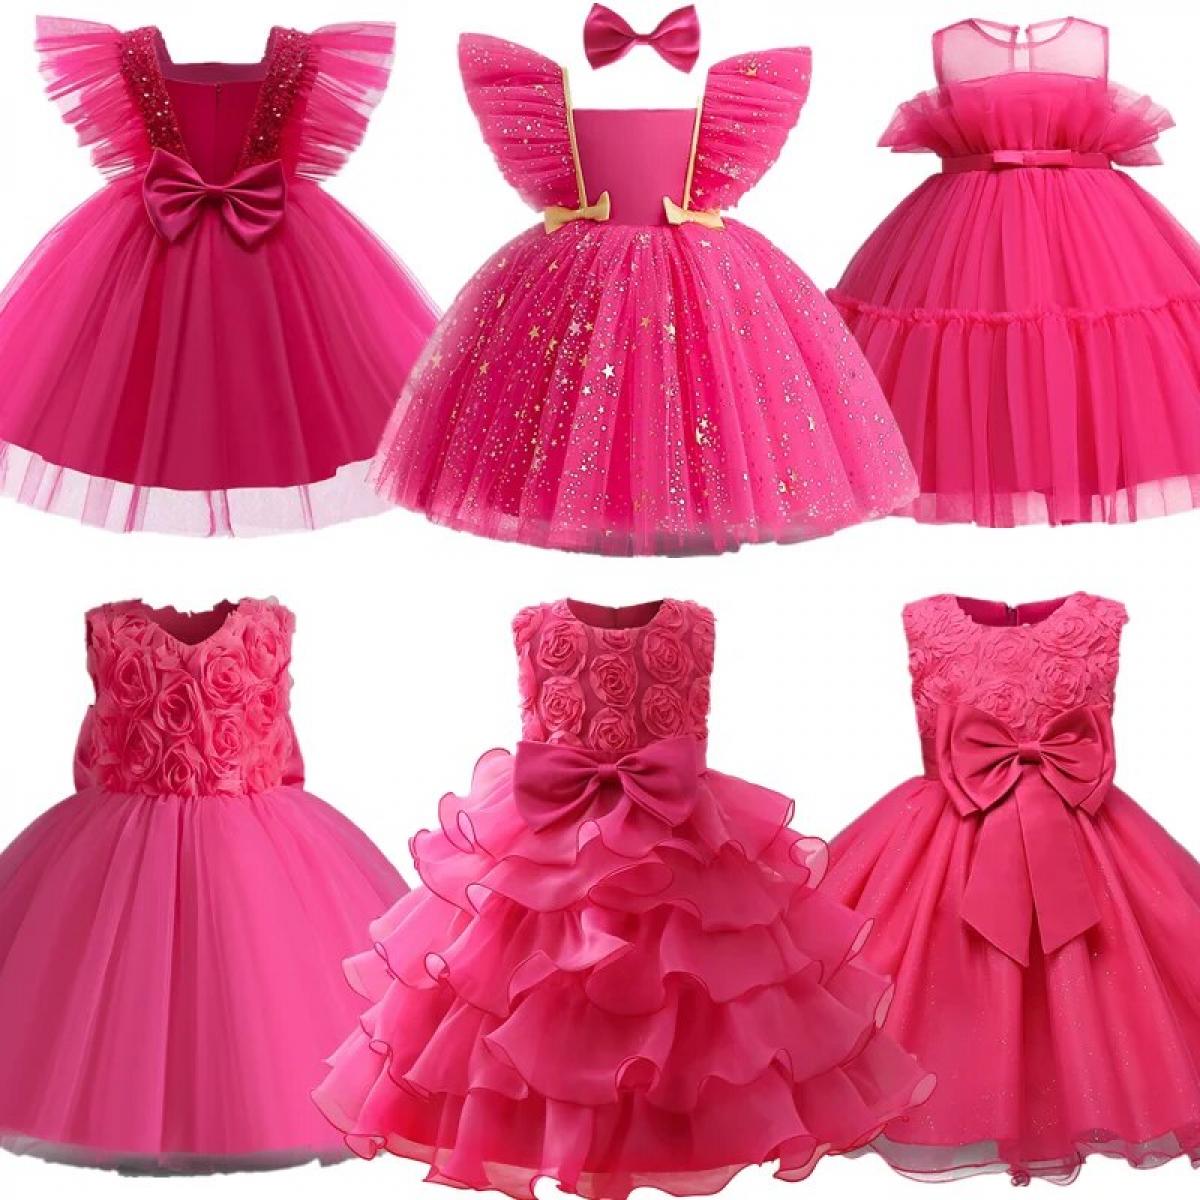 Girl Princess Dress For Wedding Birthday Party Vestidos Kids Evening Tutu Gown Pink Dress For Girls 1 10 Yrs